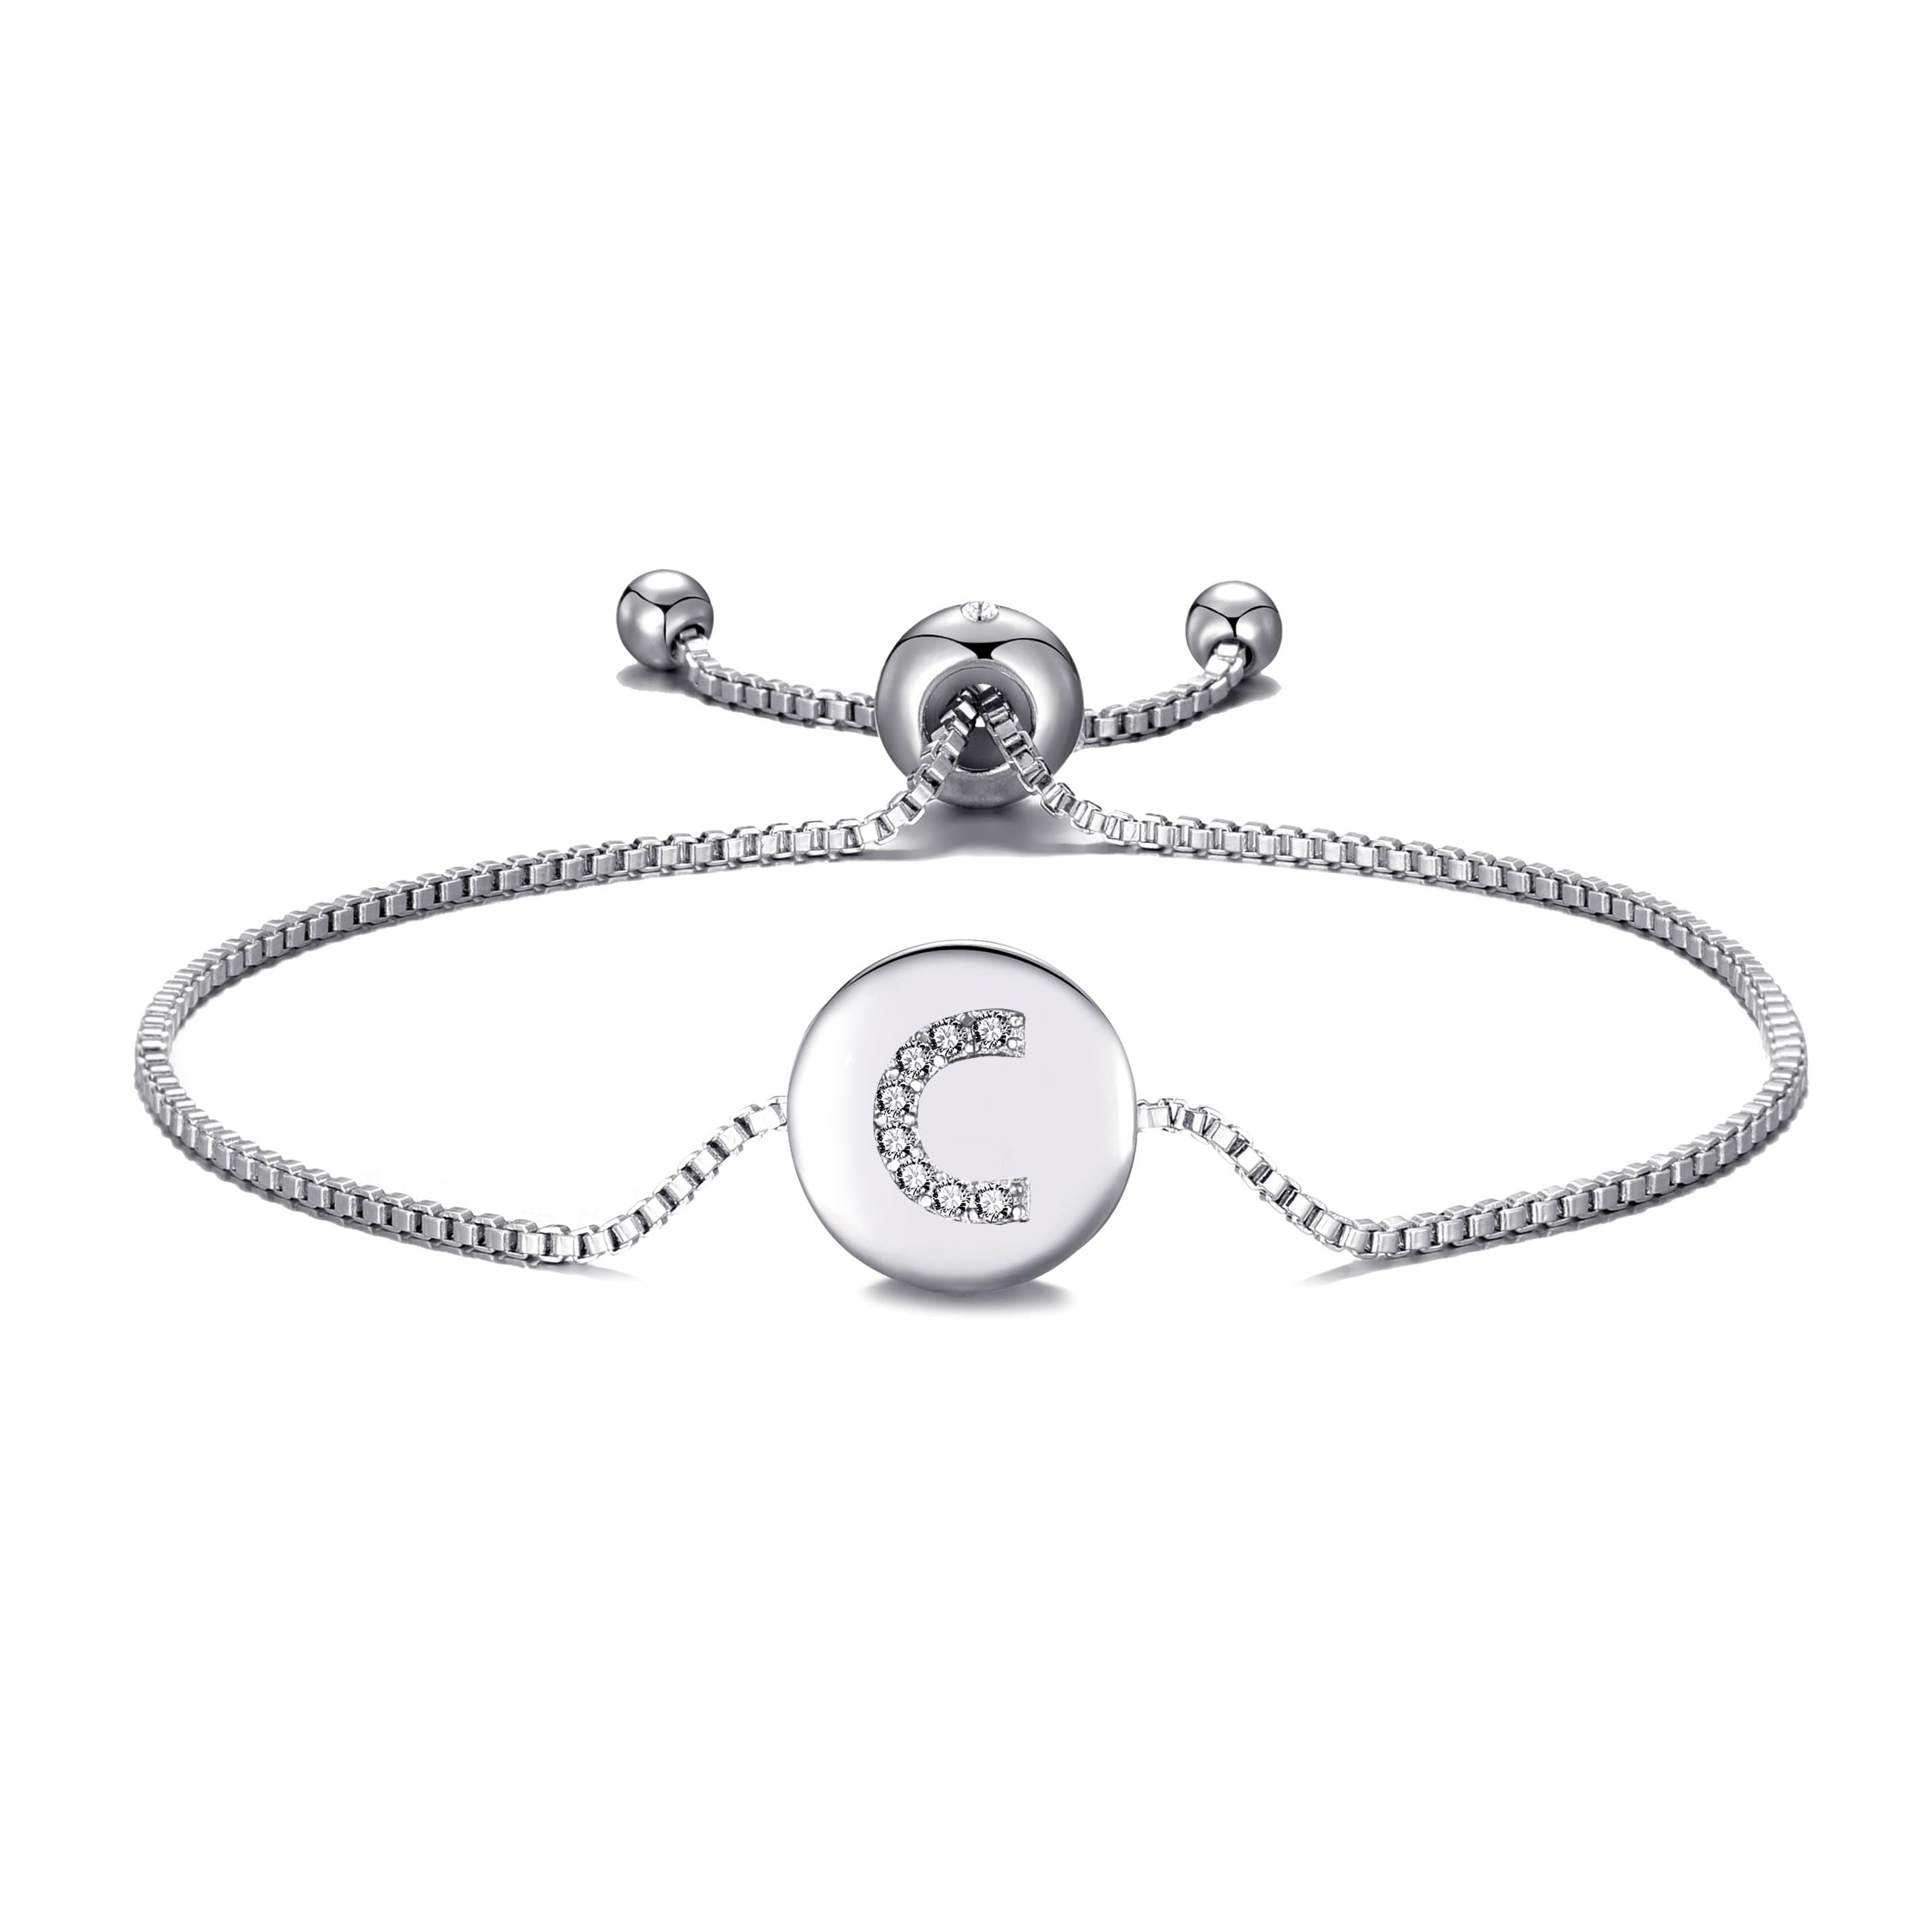 Initial Friendship Bracelet Letter C Created with Zircondia® Crystals by Philip Jones Jewellery